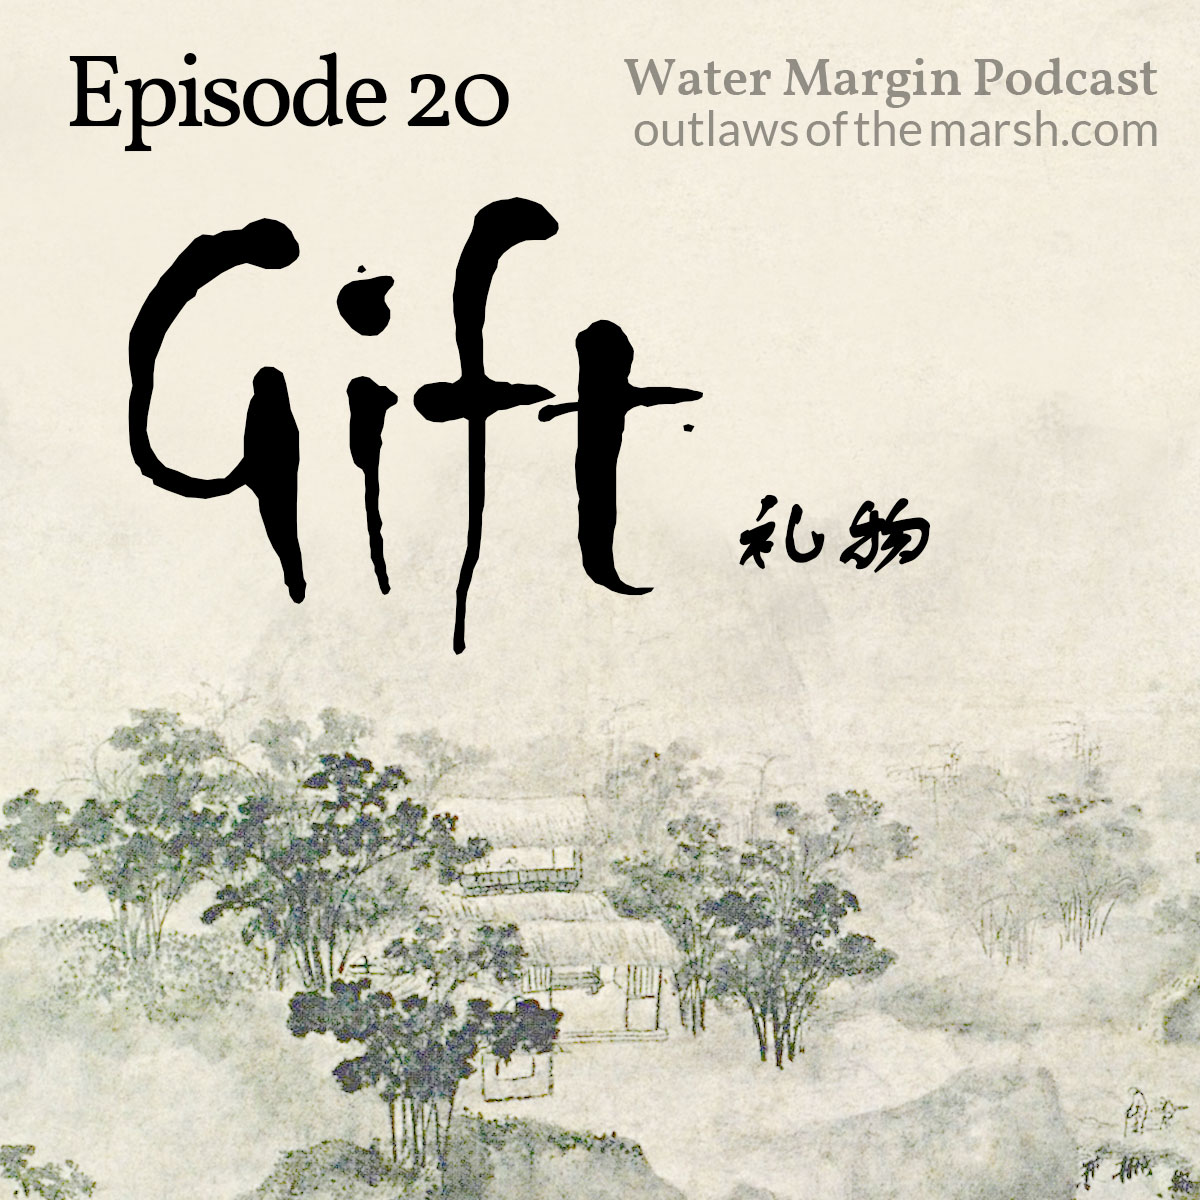 Water Margin Podcast: Episode 020